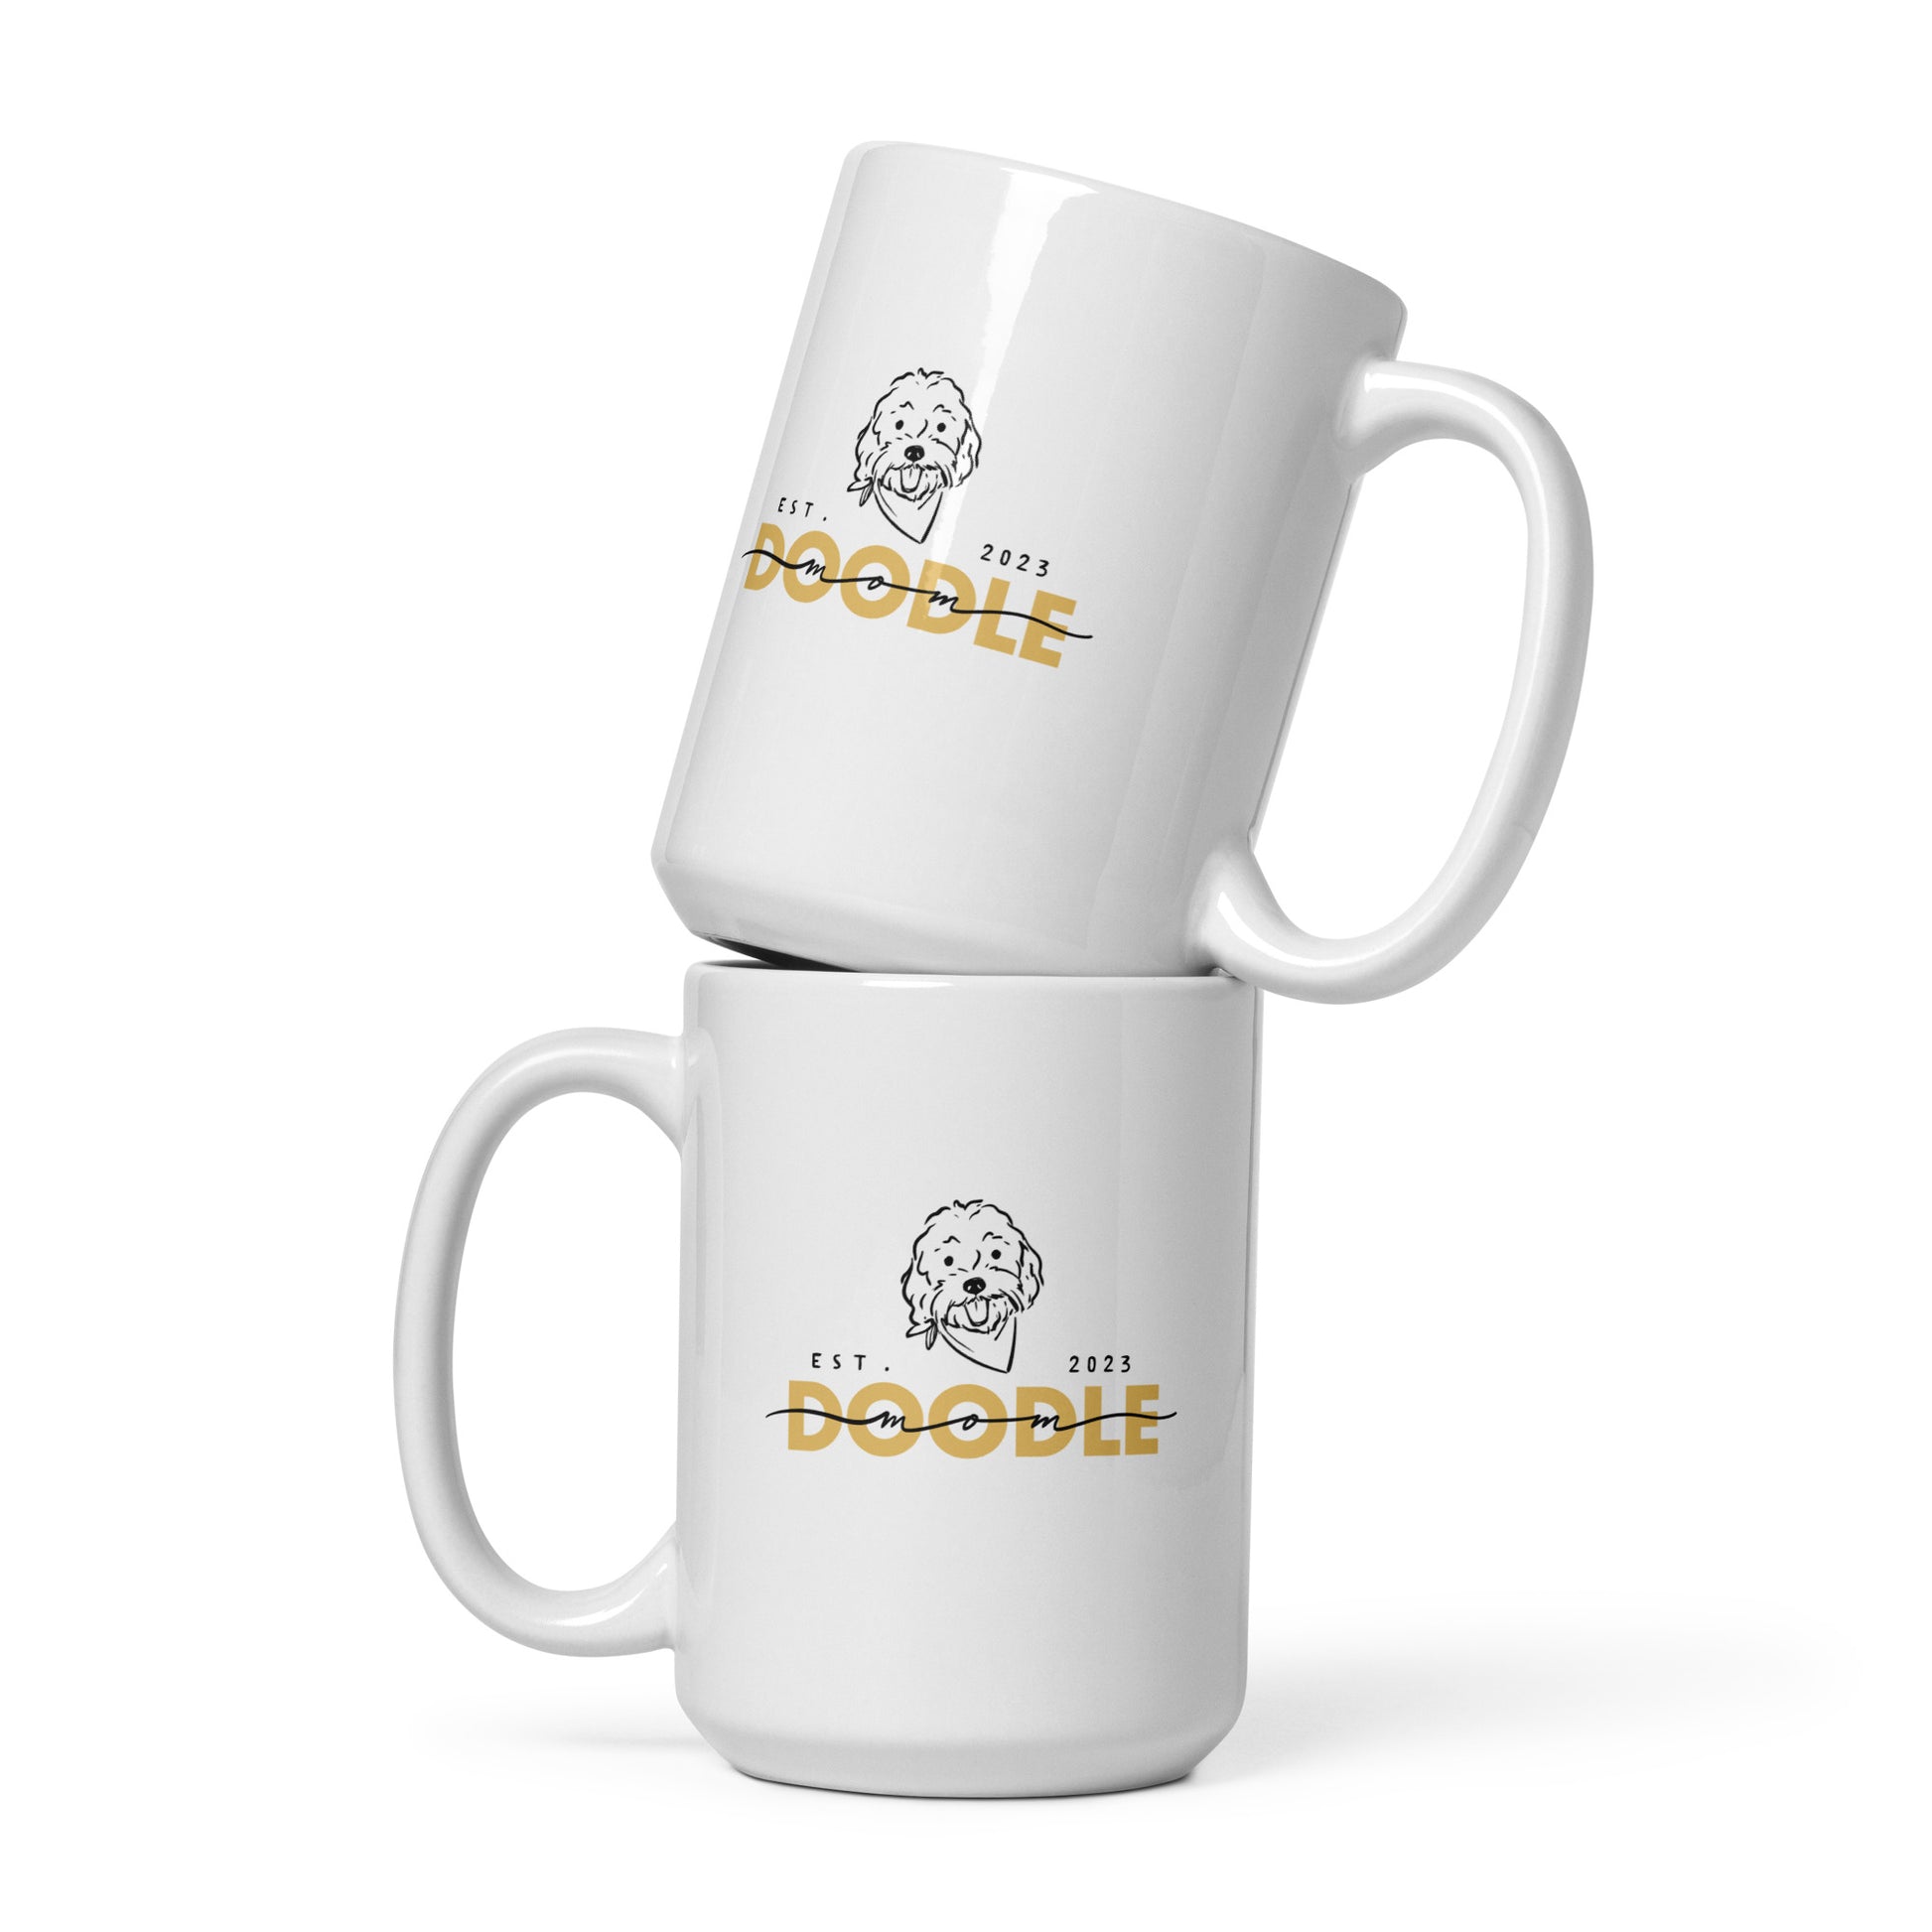 White ceramic coffee mug with cute doodle dog design and words Doodle Mom Est. 2023